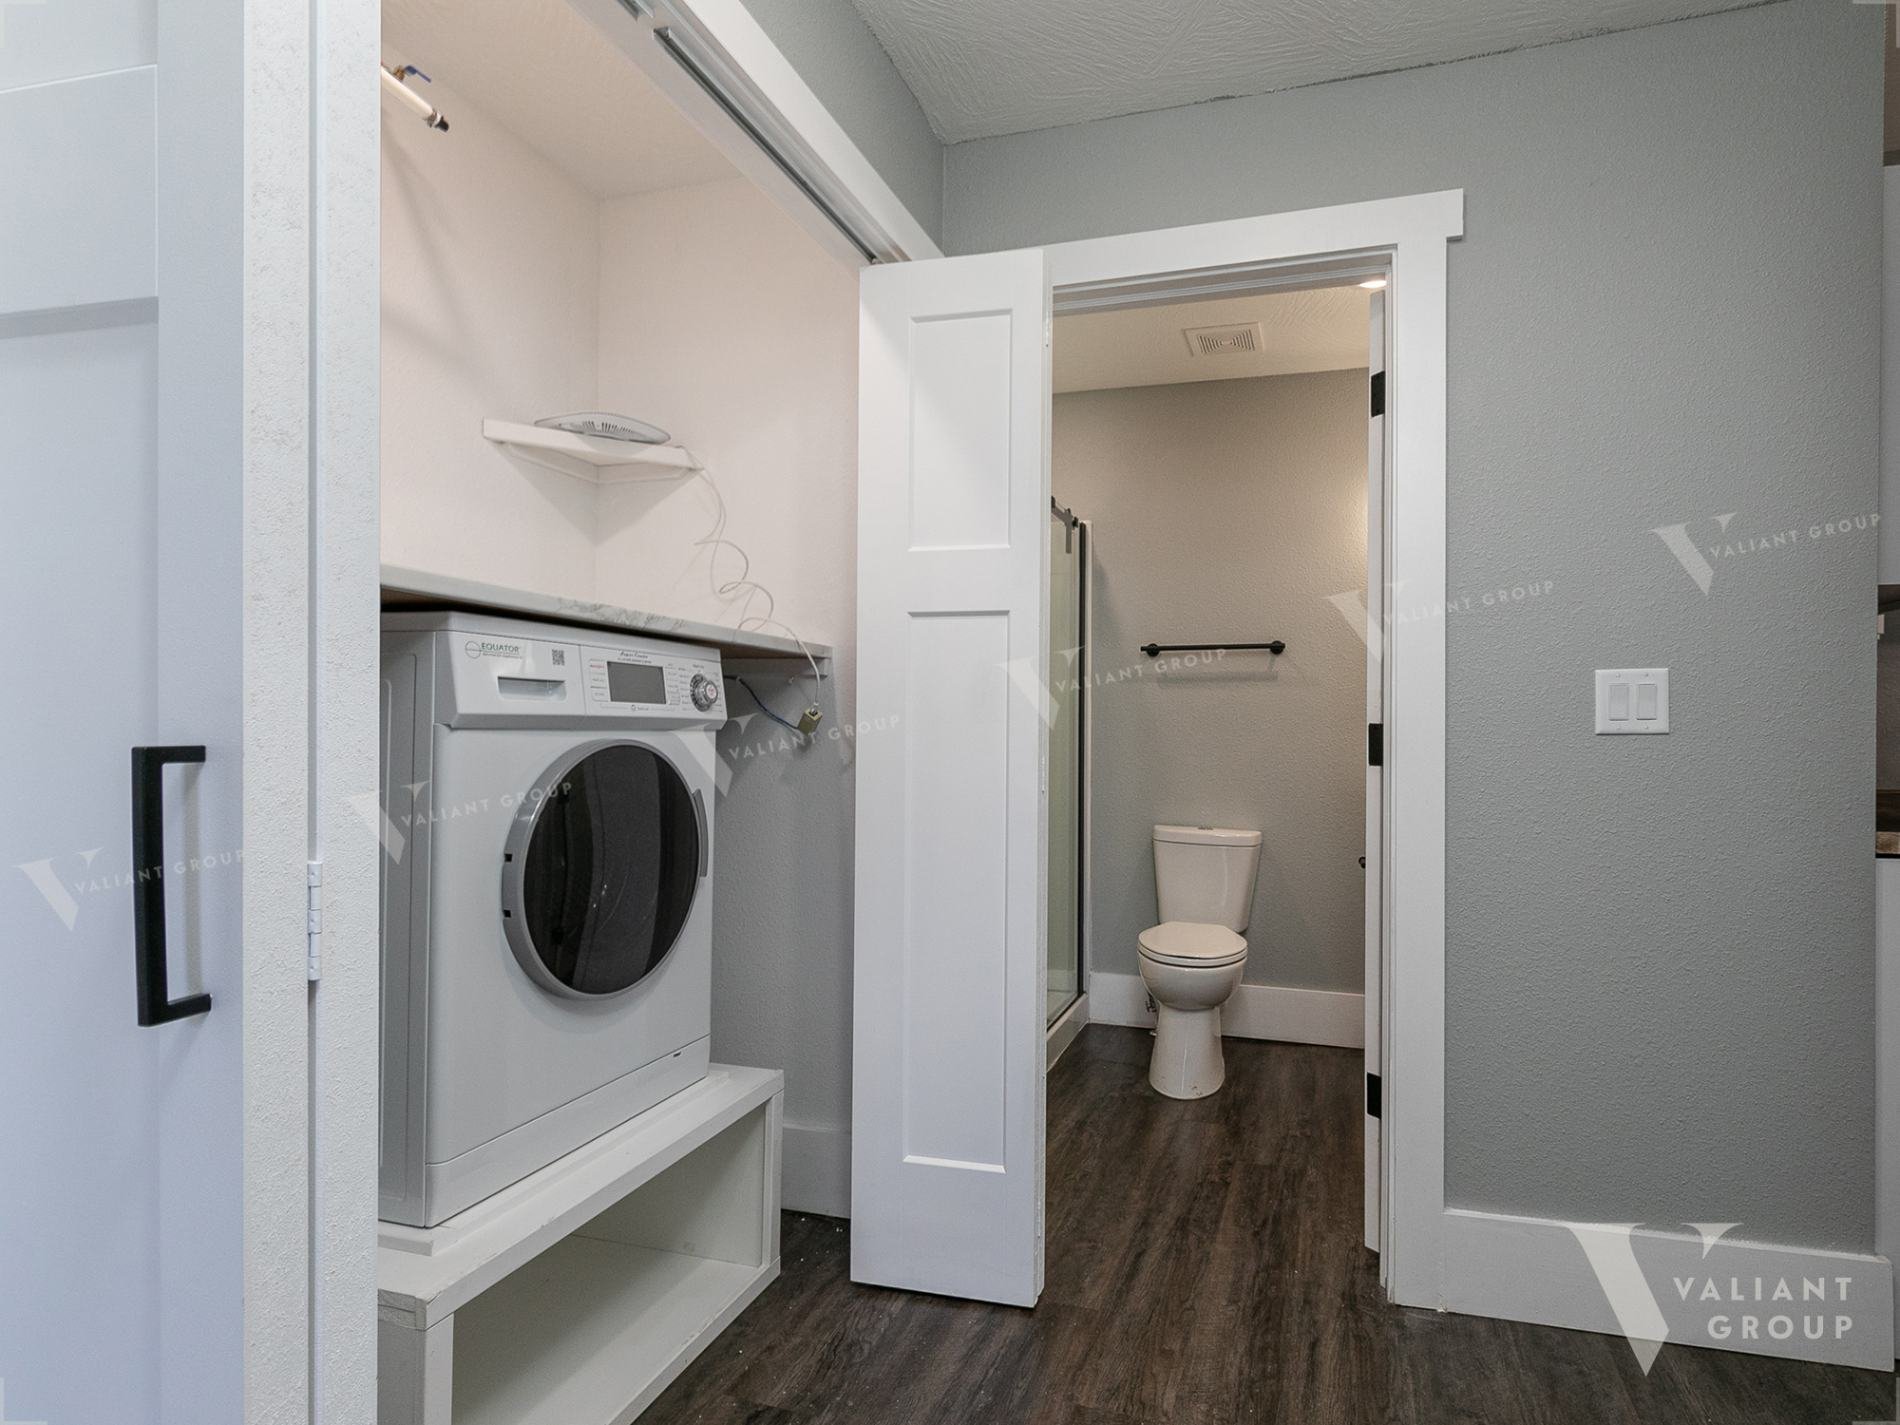 Rental-Apartment-806-South-Ave-Apt-04-Springfield-MO-05-Laundry-Bathroom.jpg